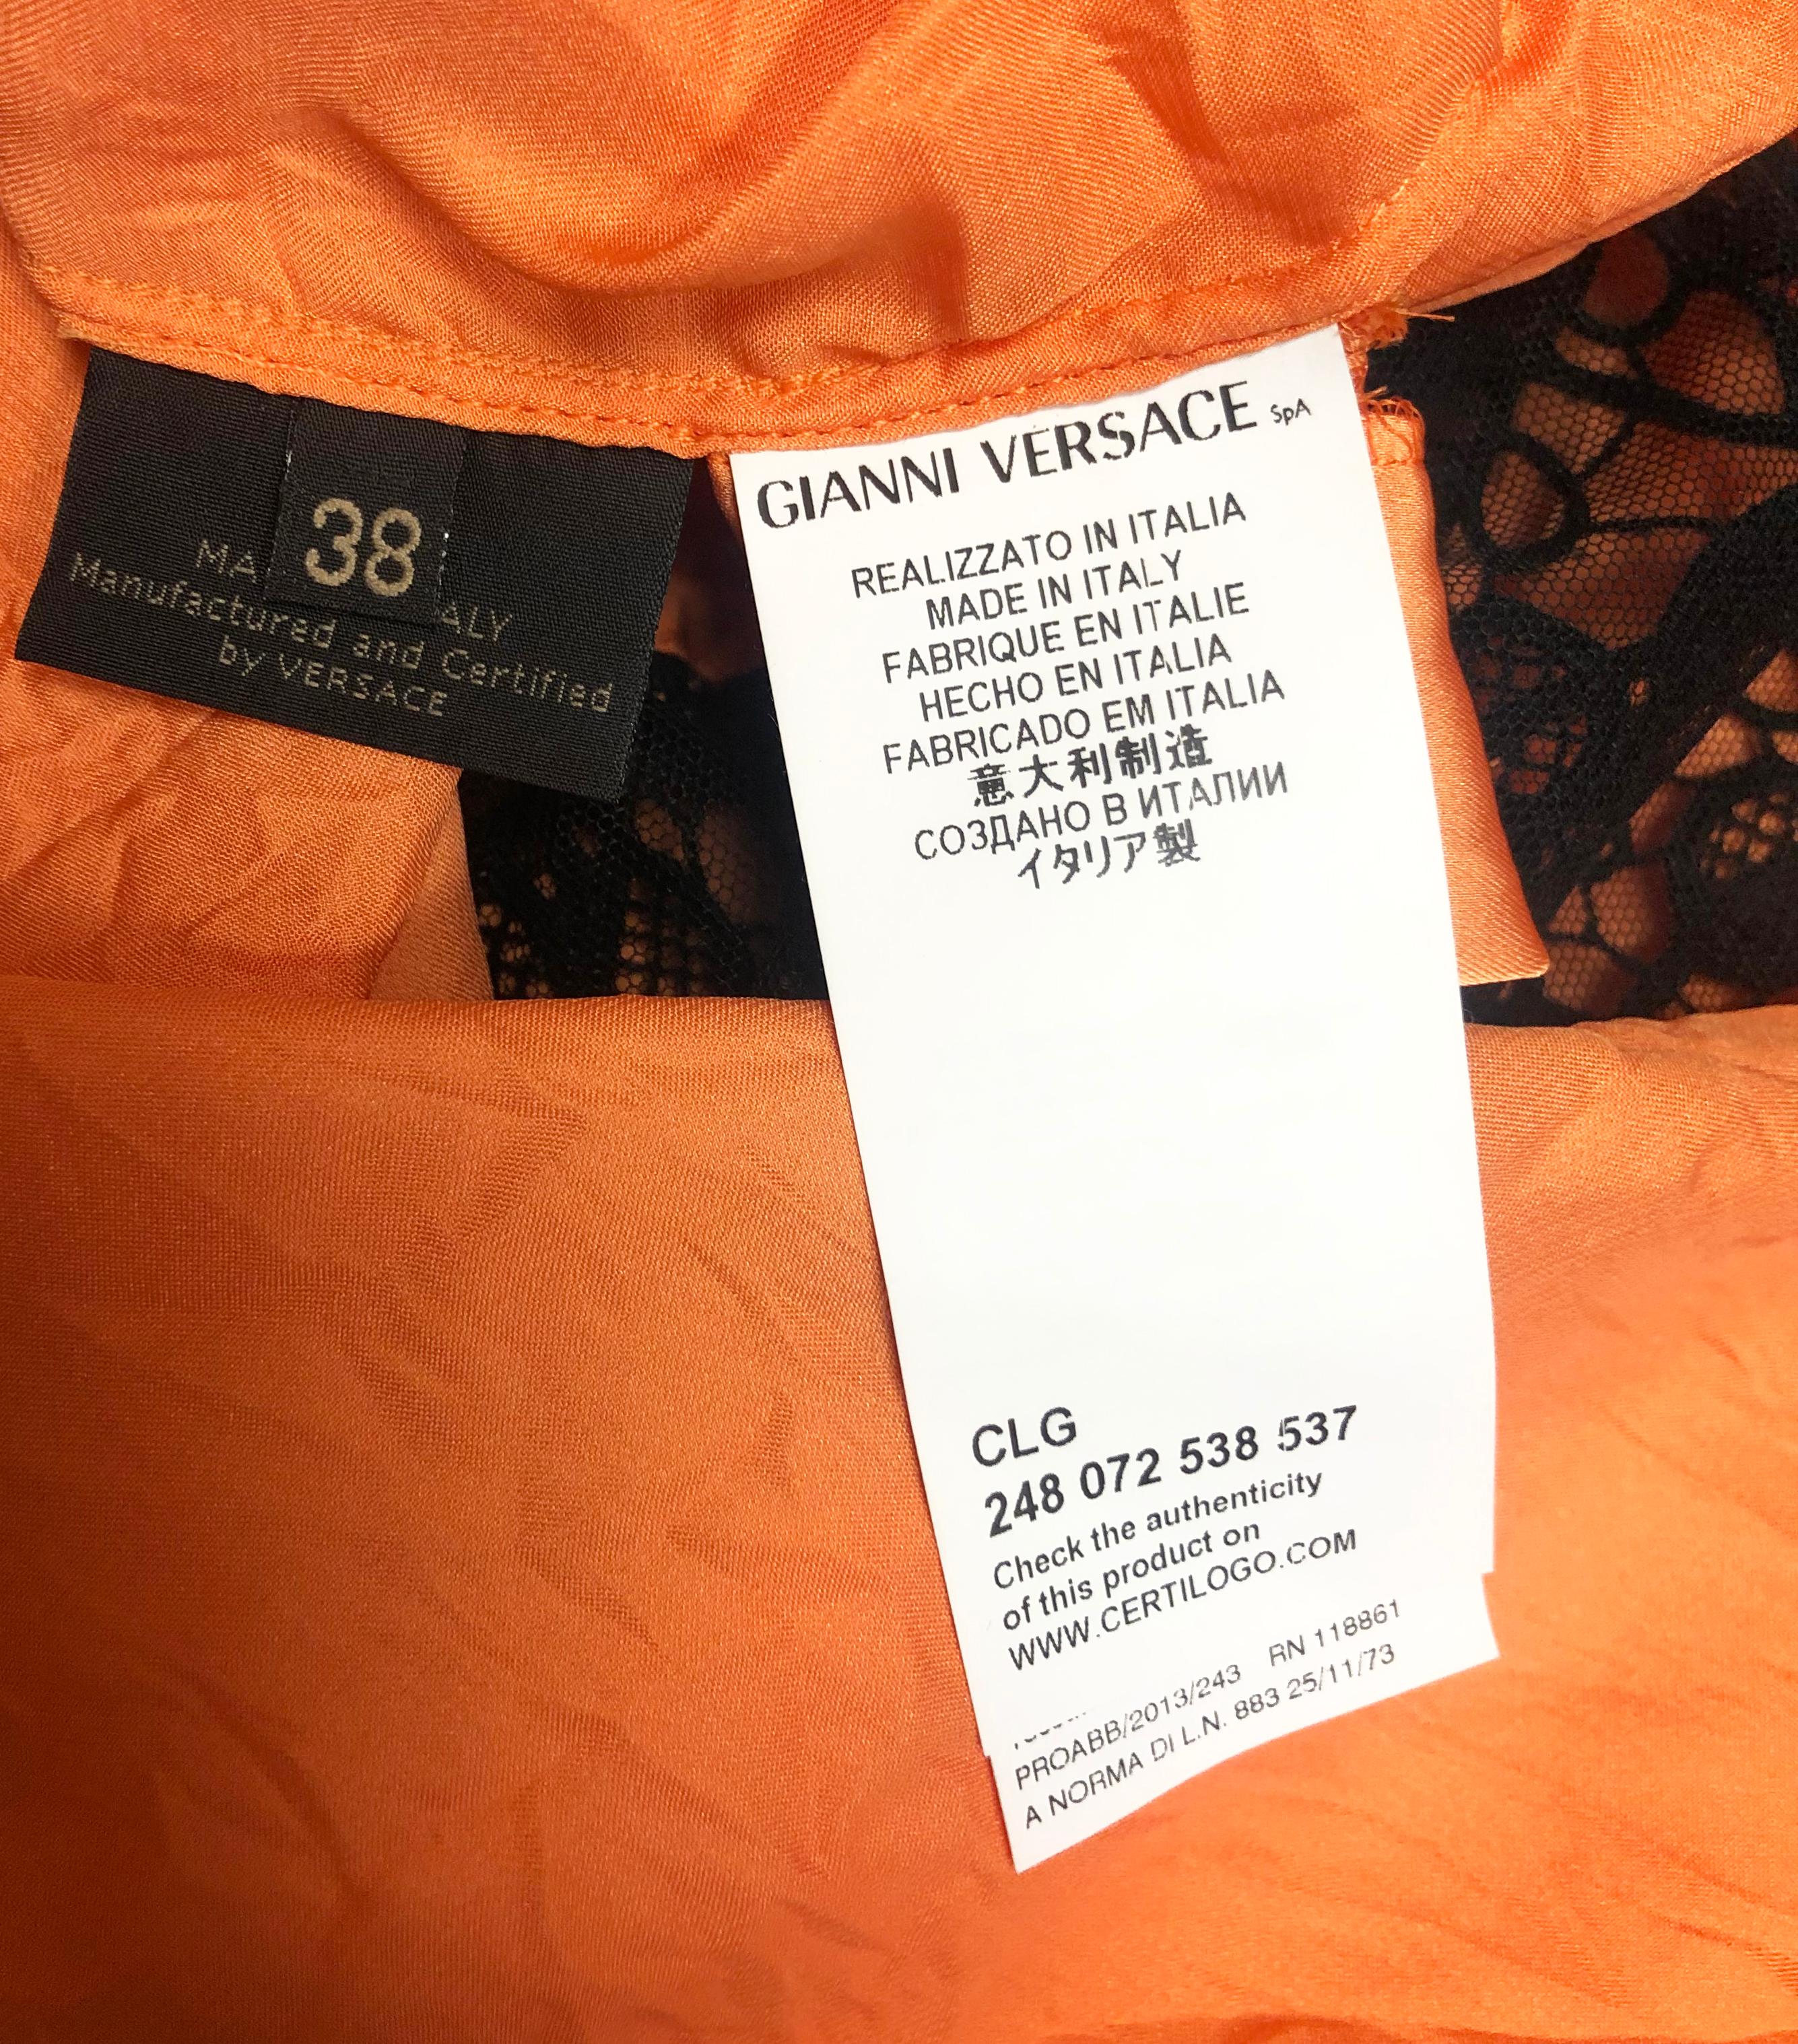 S/S13 L# 8 VERSACE - Robe en dentelle noire orange RACERBACK 40 - 4 38 - 2, 40 - 4  en vente 4